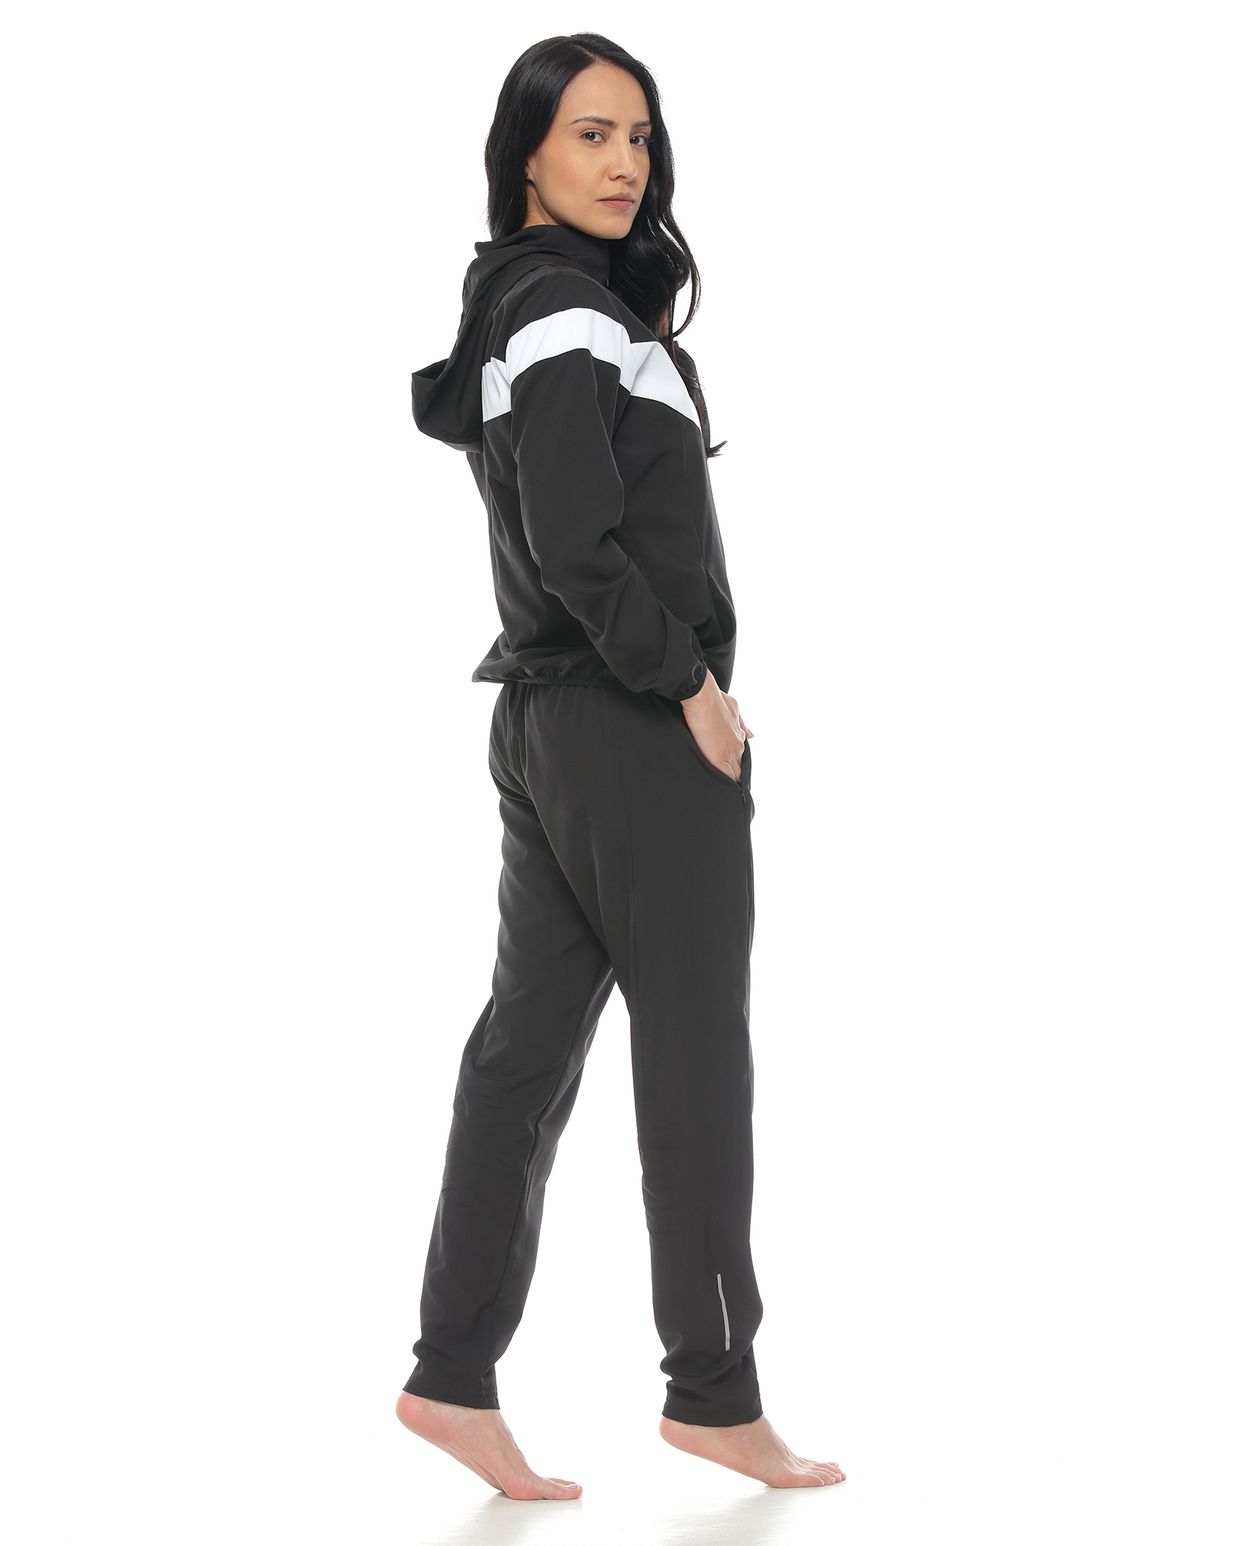 modelo con Pantalon Deportivo Negro y chaqueta autoguardable para Mujer parte lateral derecha